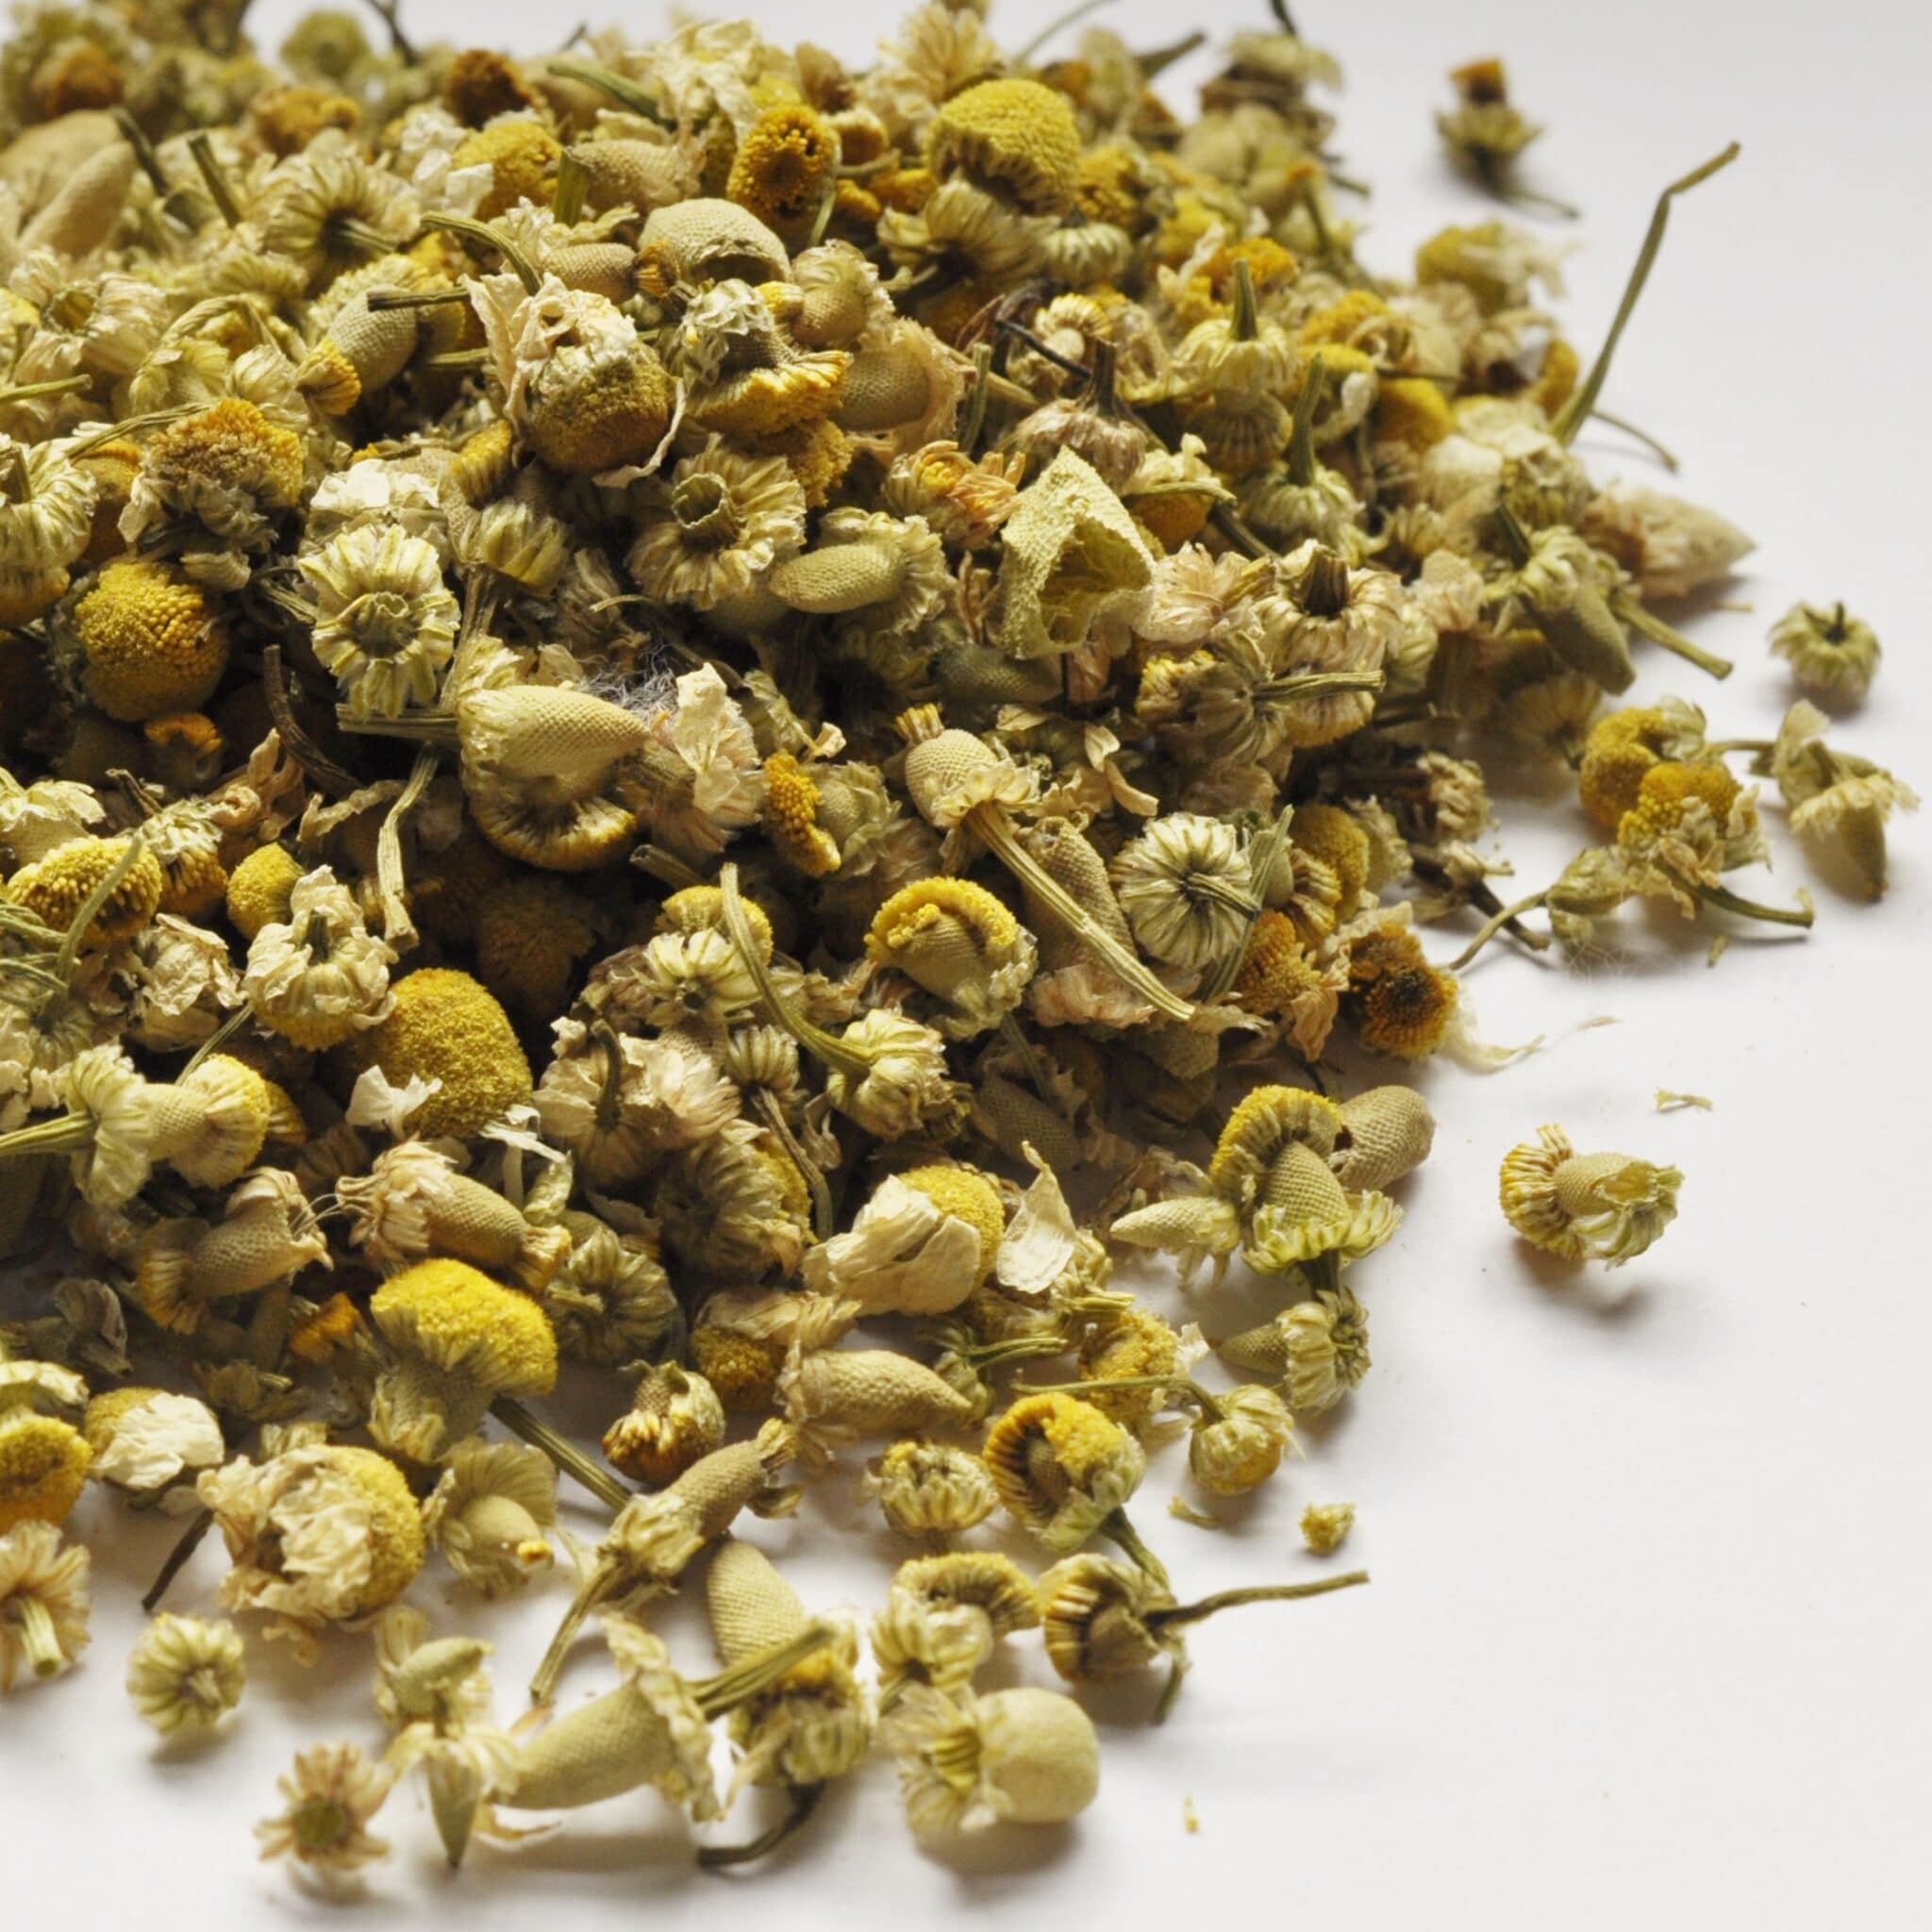 Buy loose leaf teas online - Chamomile Flower Loose Herbal Infusion